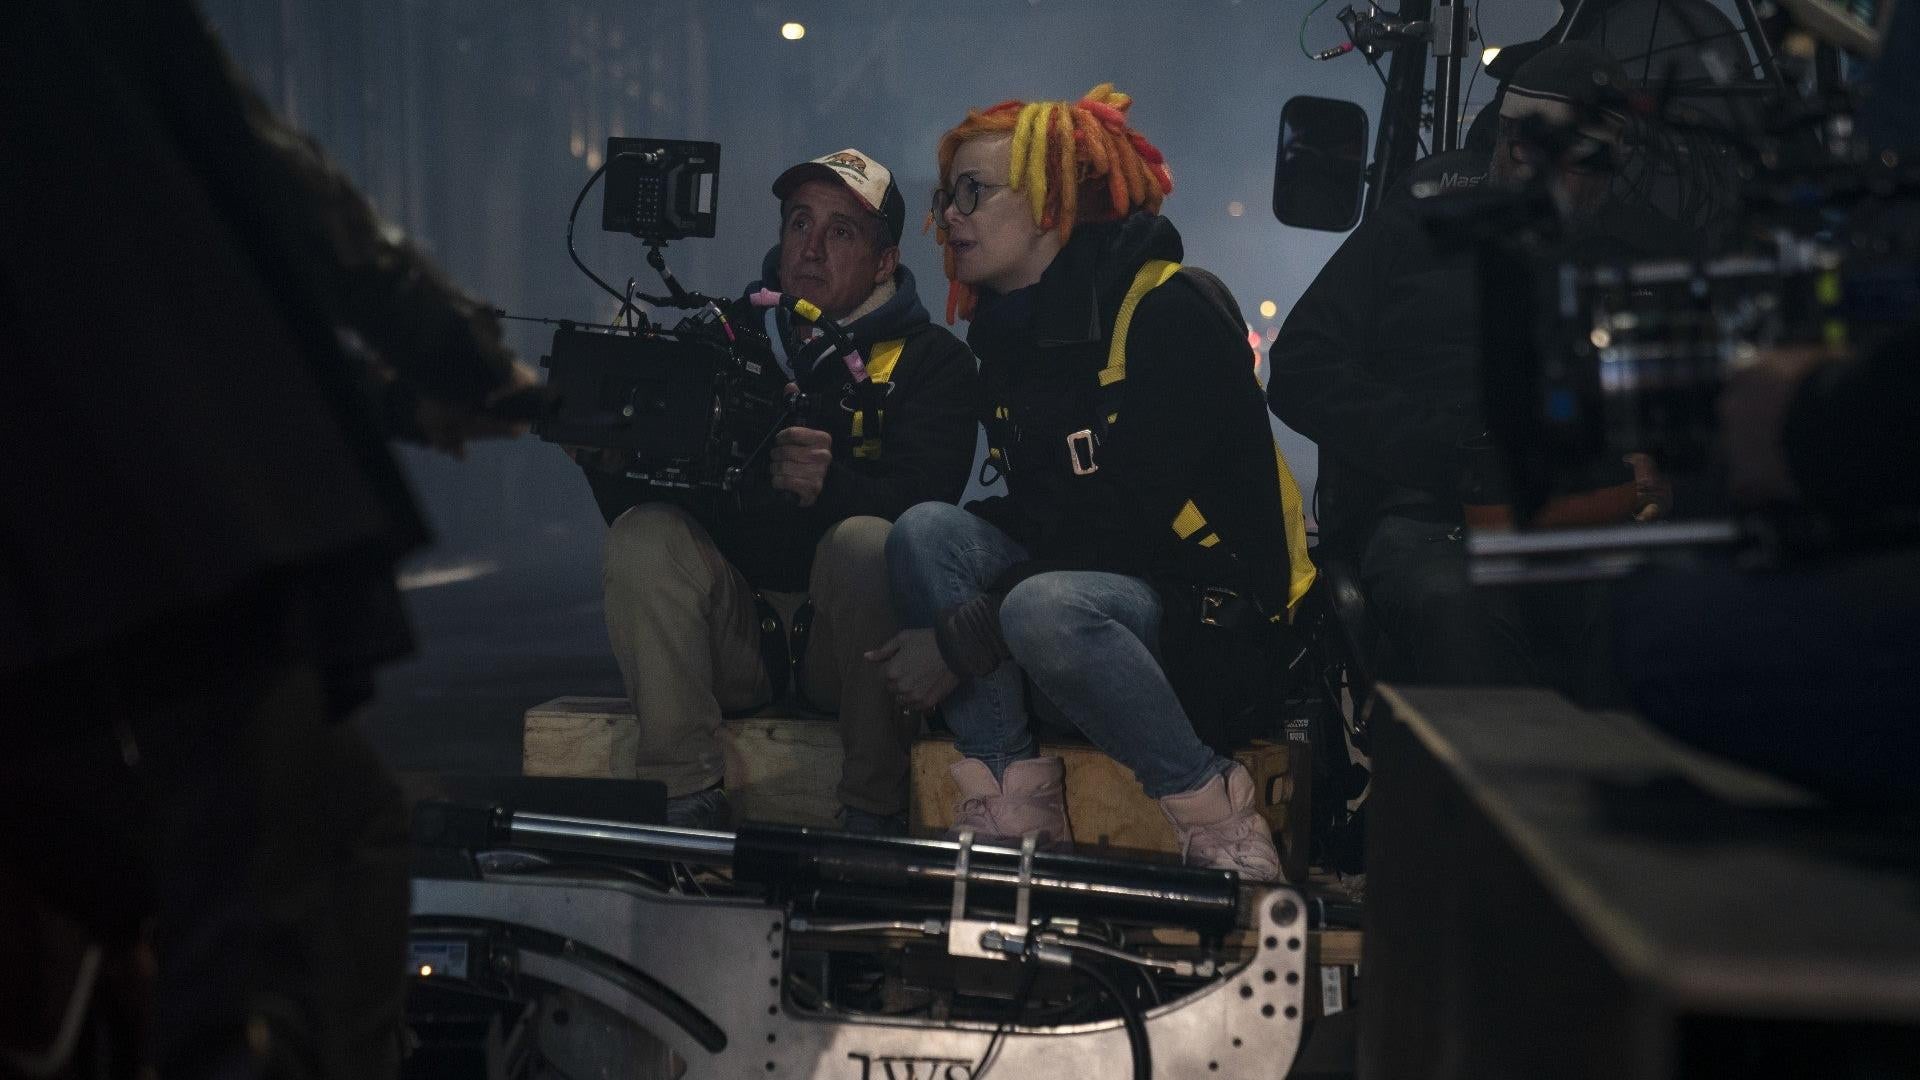 Lana Wachowski and her DP Daniele Massaccesi on the set of Matrix Resurrections. (Image: Warner Bros.)